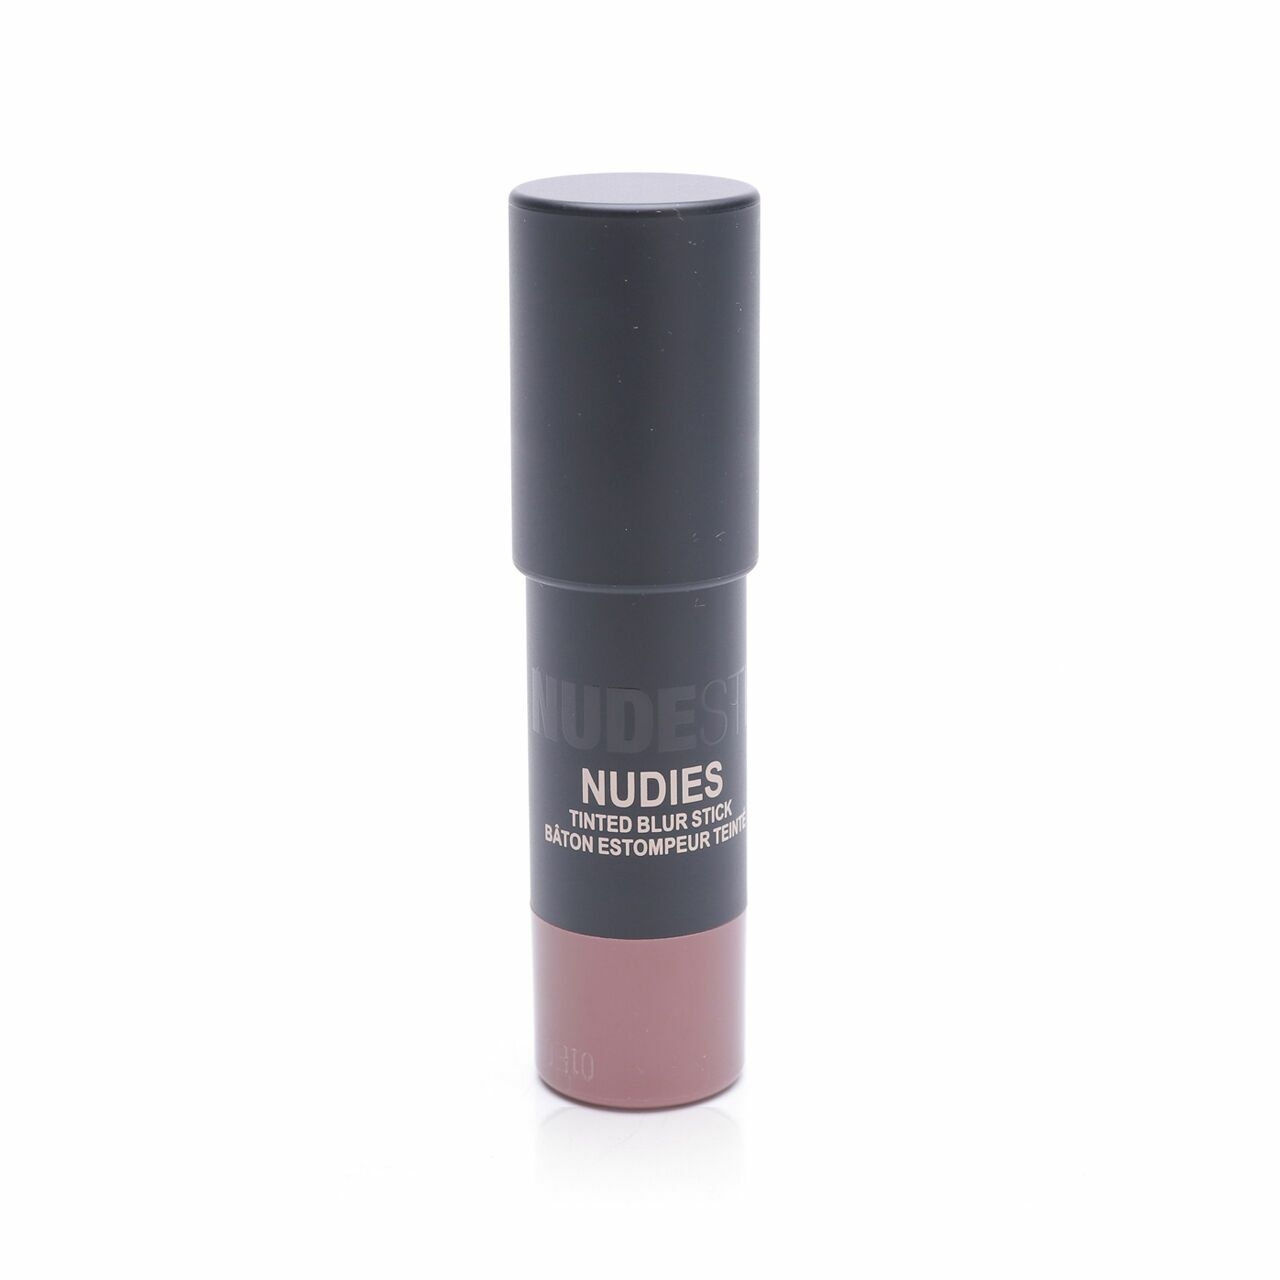 Nudestix Nudies Tinted Blur Stick Faces